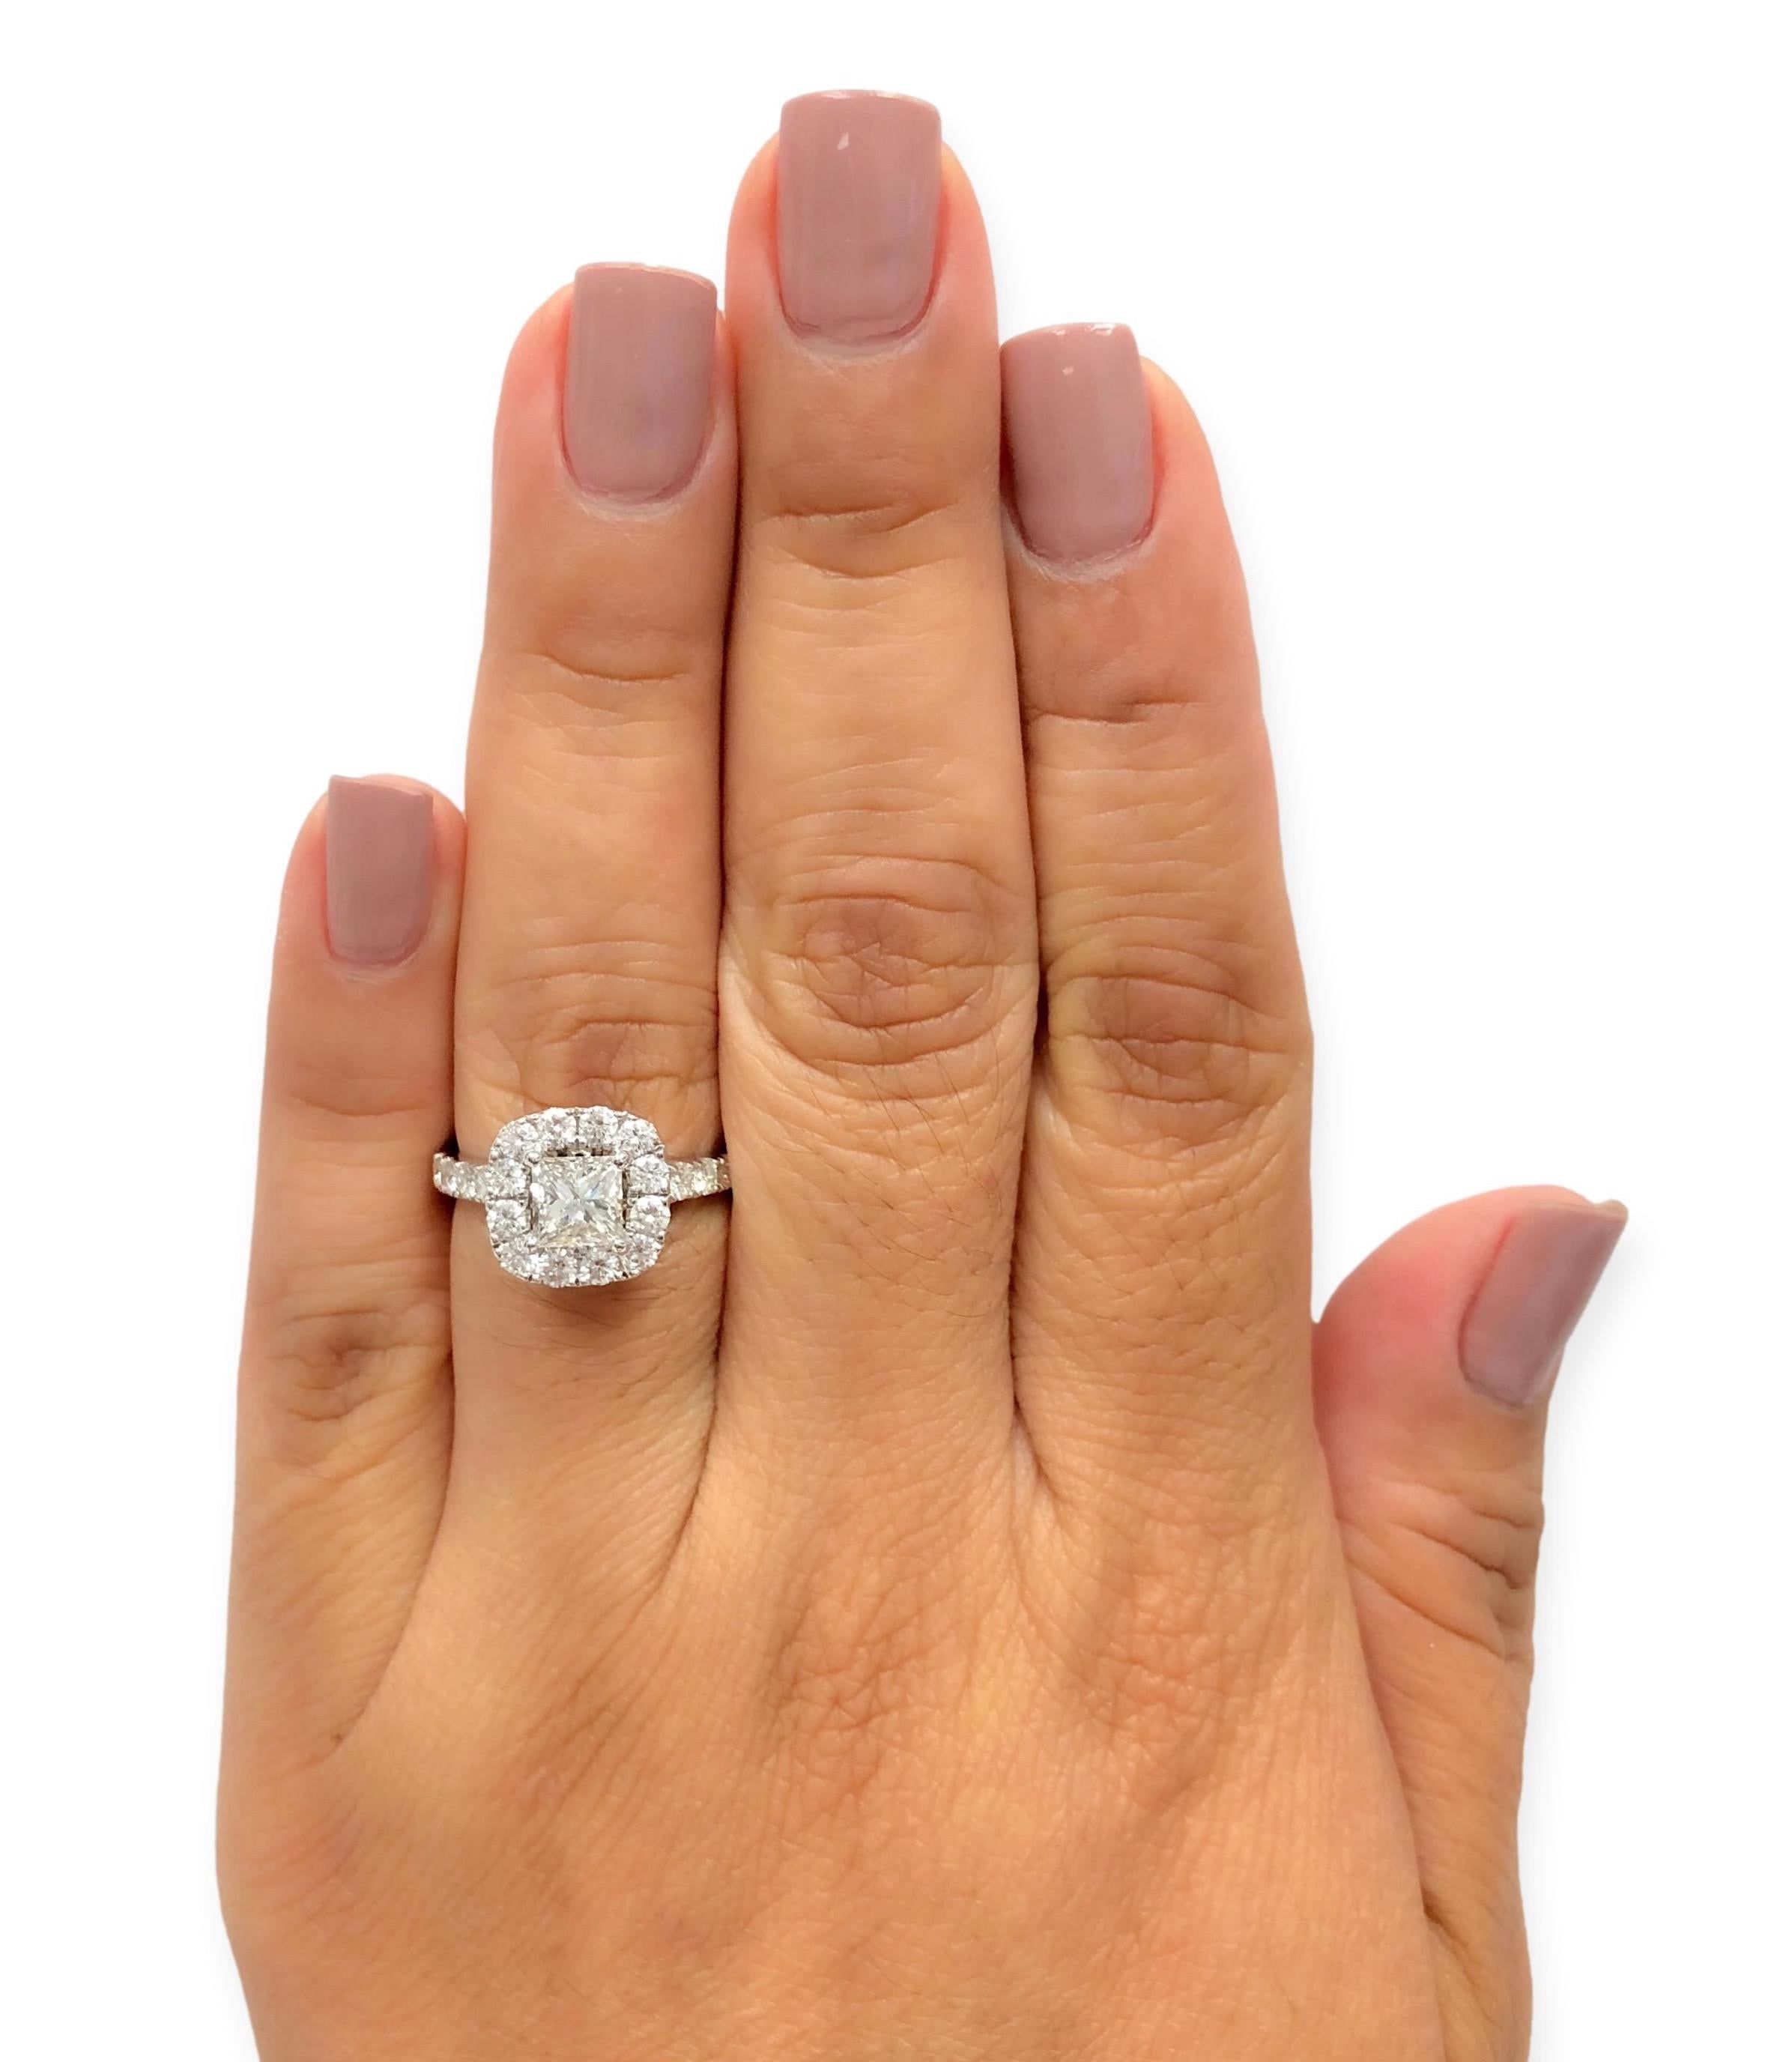 Neil Lane 14K White Gold Cluster 2.13 ct. TW Round Diamond Engagement Ring For Sale 2